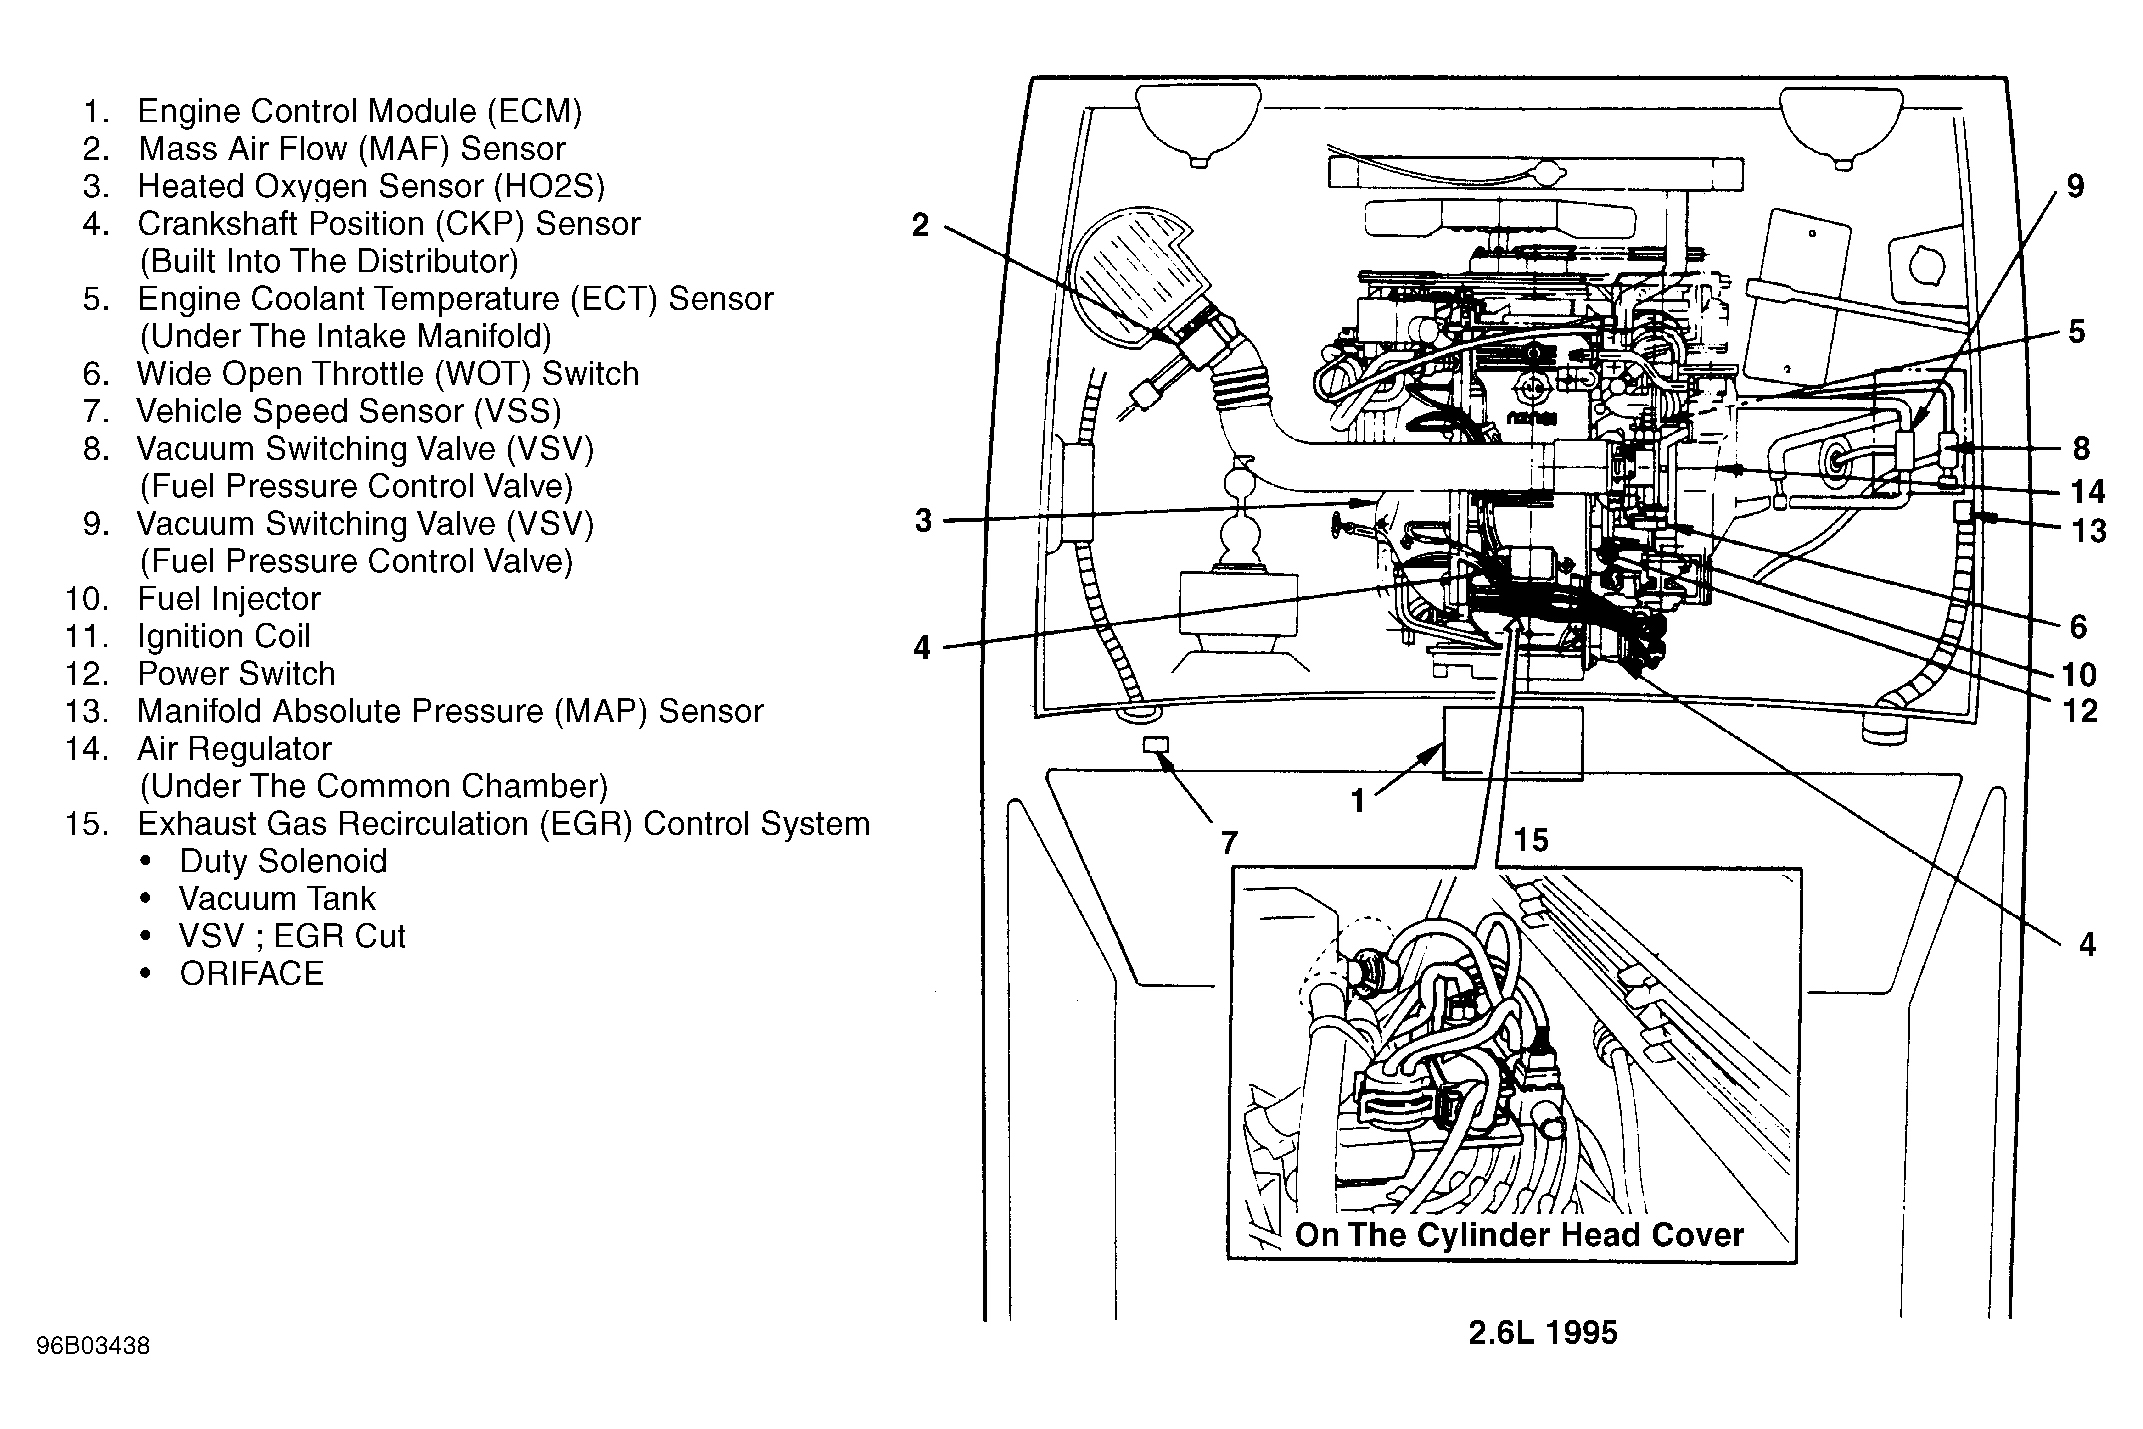 Honda Passport EX 1995 - Component Locations -  Engine Compartment (2.6L 1995)